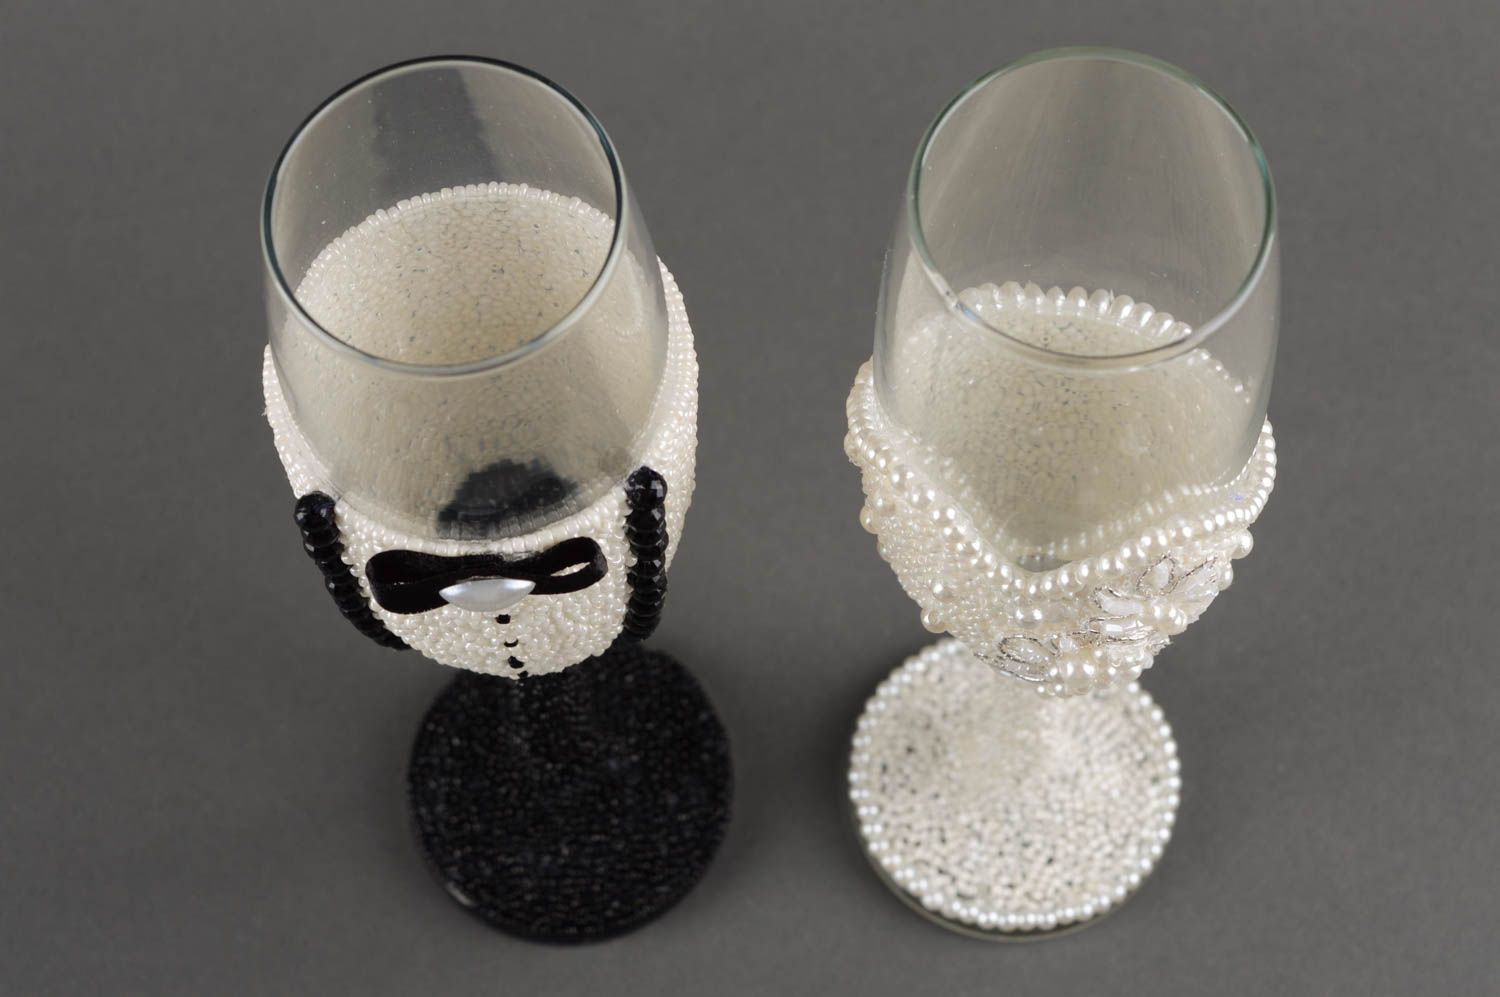 Handmade wedding glasses 2 pieces decorative glass ware wine glass gift ideas photo 10